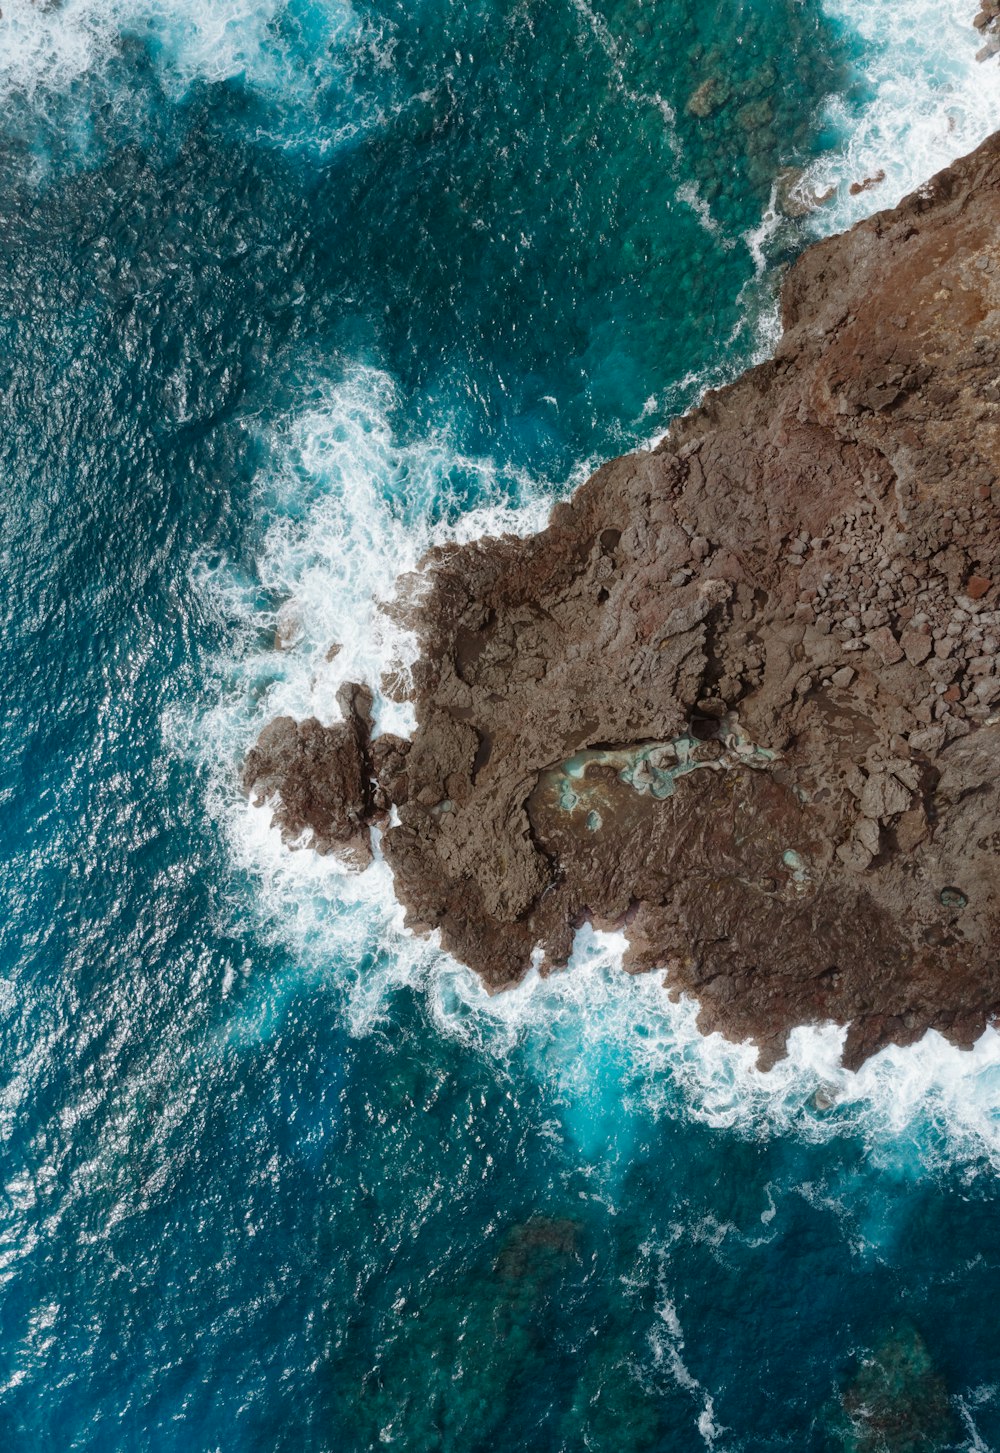 bird's-eye view of brown rocks on body of water